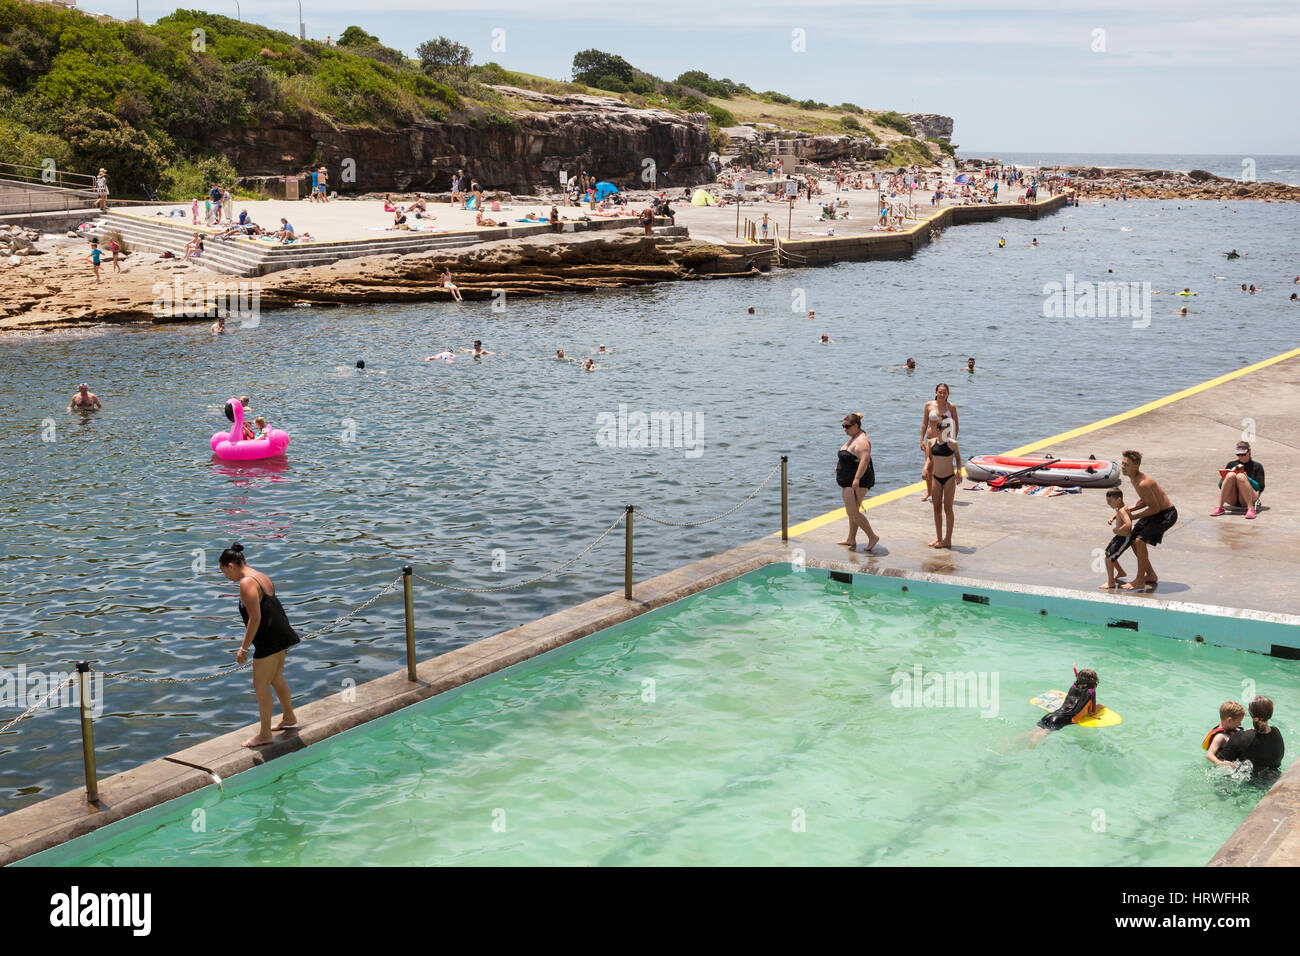 Saltwater pool, Clovelly, Sydney, New South Wales, Australia Stock Photo